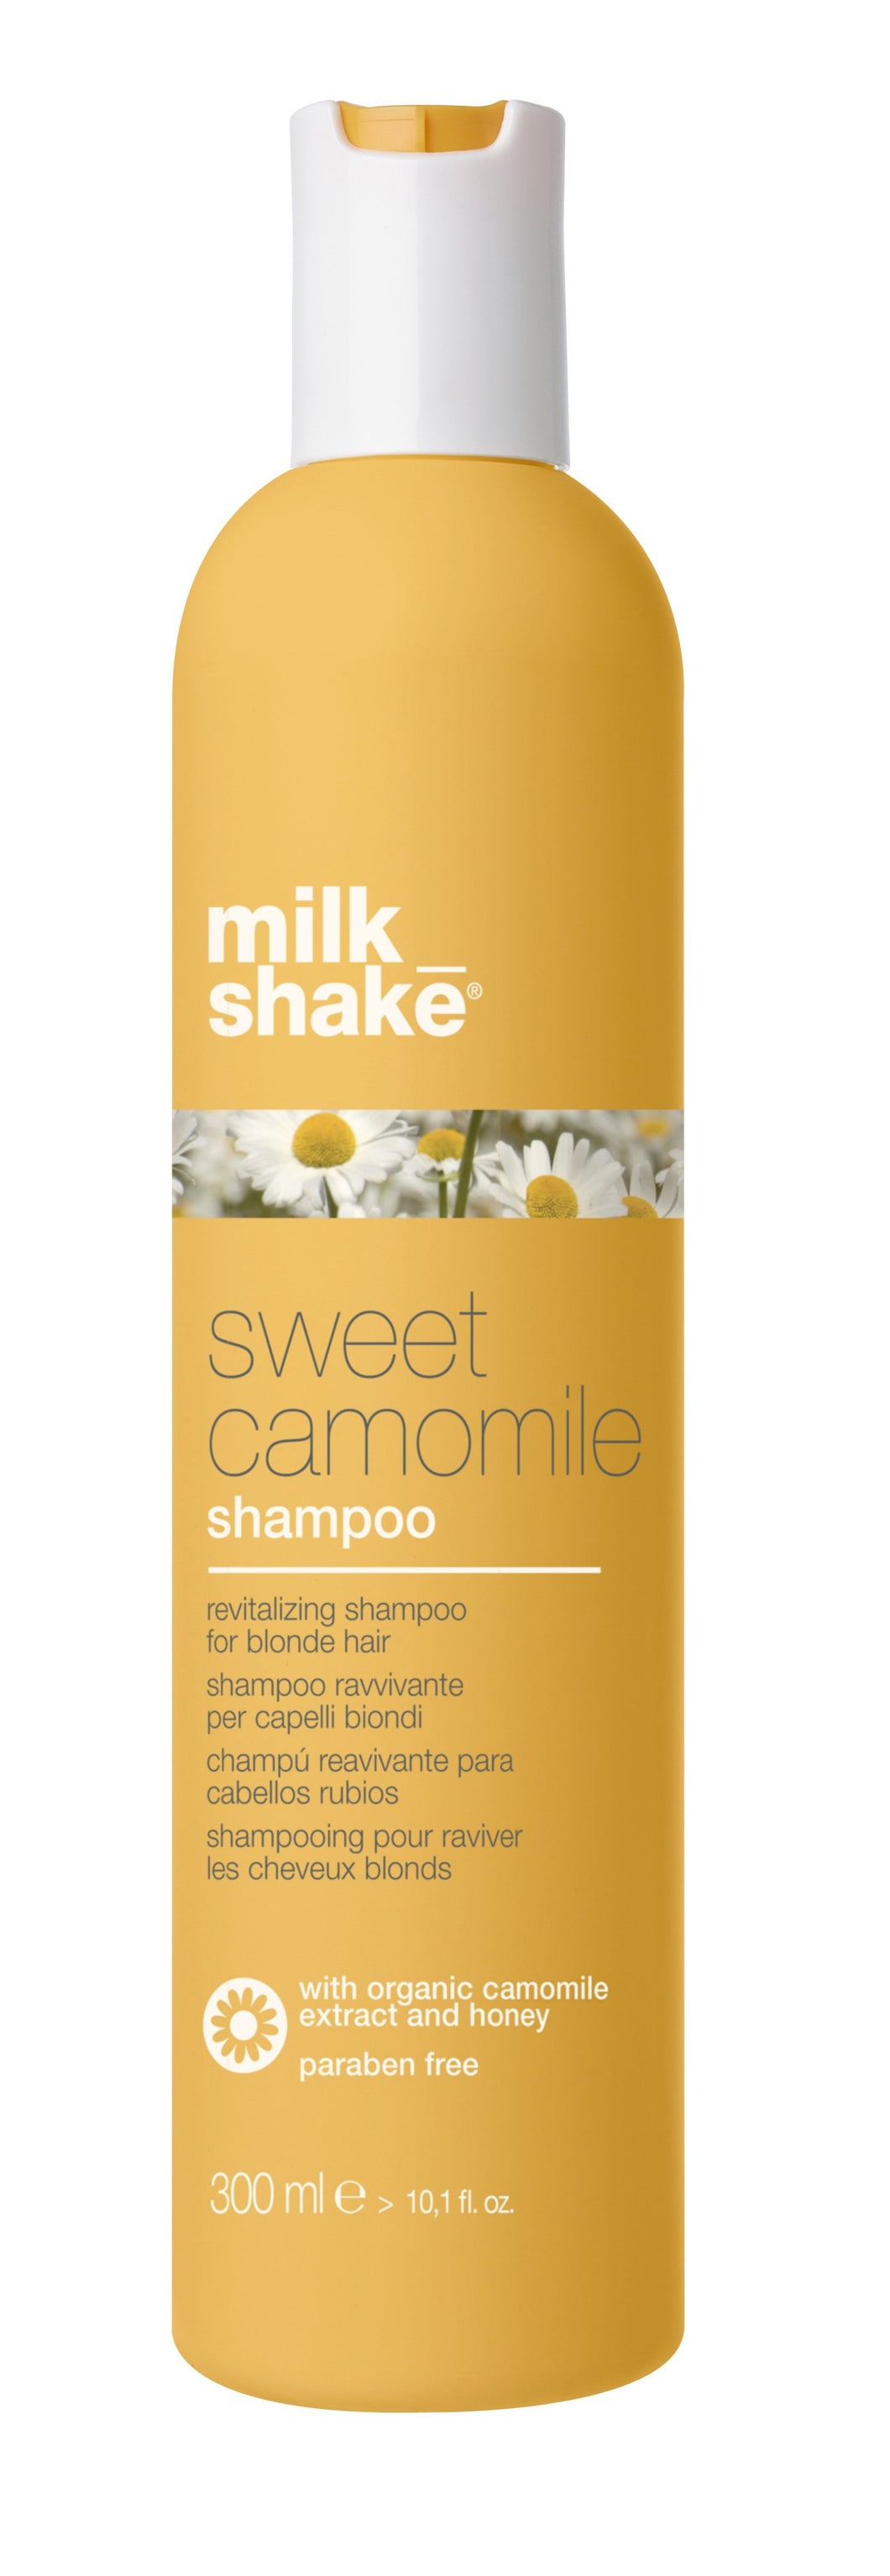 milk_shake sweet camomile shampoo